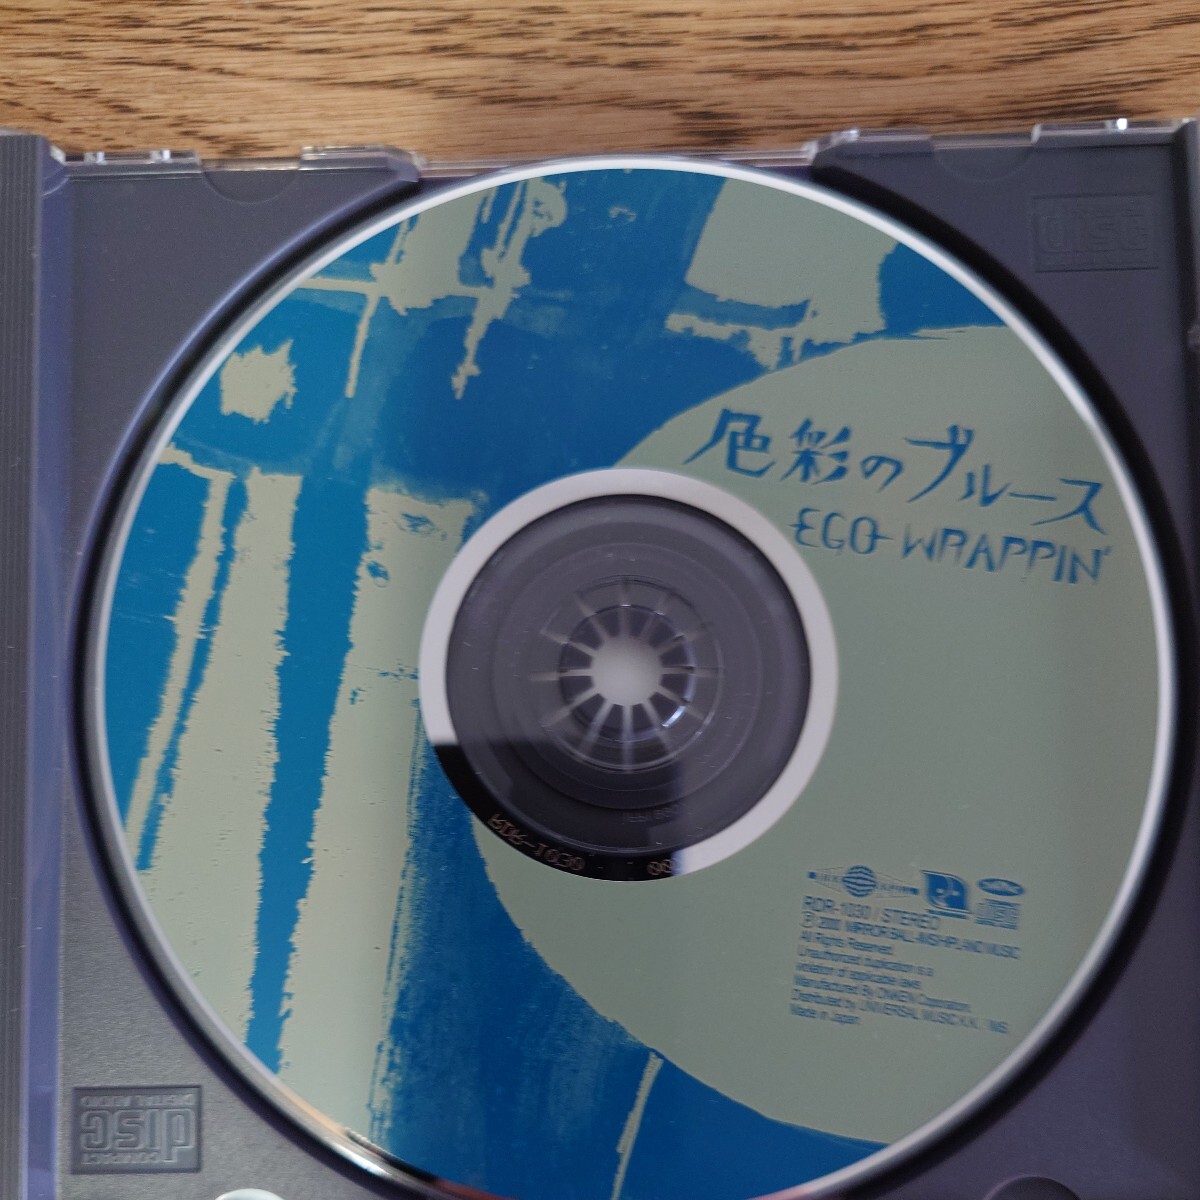 ＥＧＯ−ＷＲＡＰＰＩＮ／色彩のブルース　帯付き CD　エゴラッピン_画像4